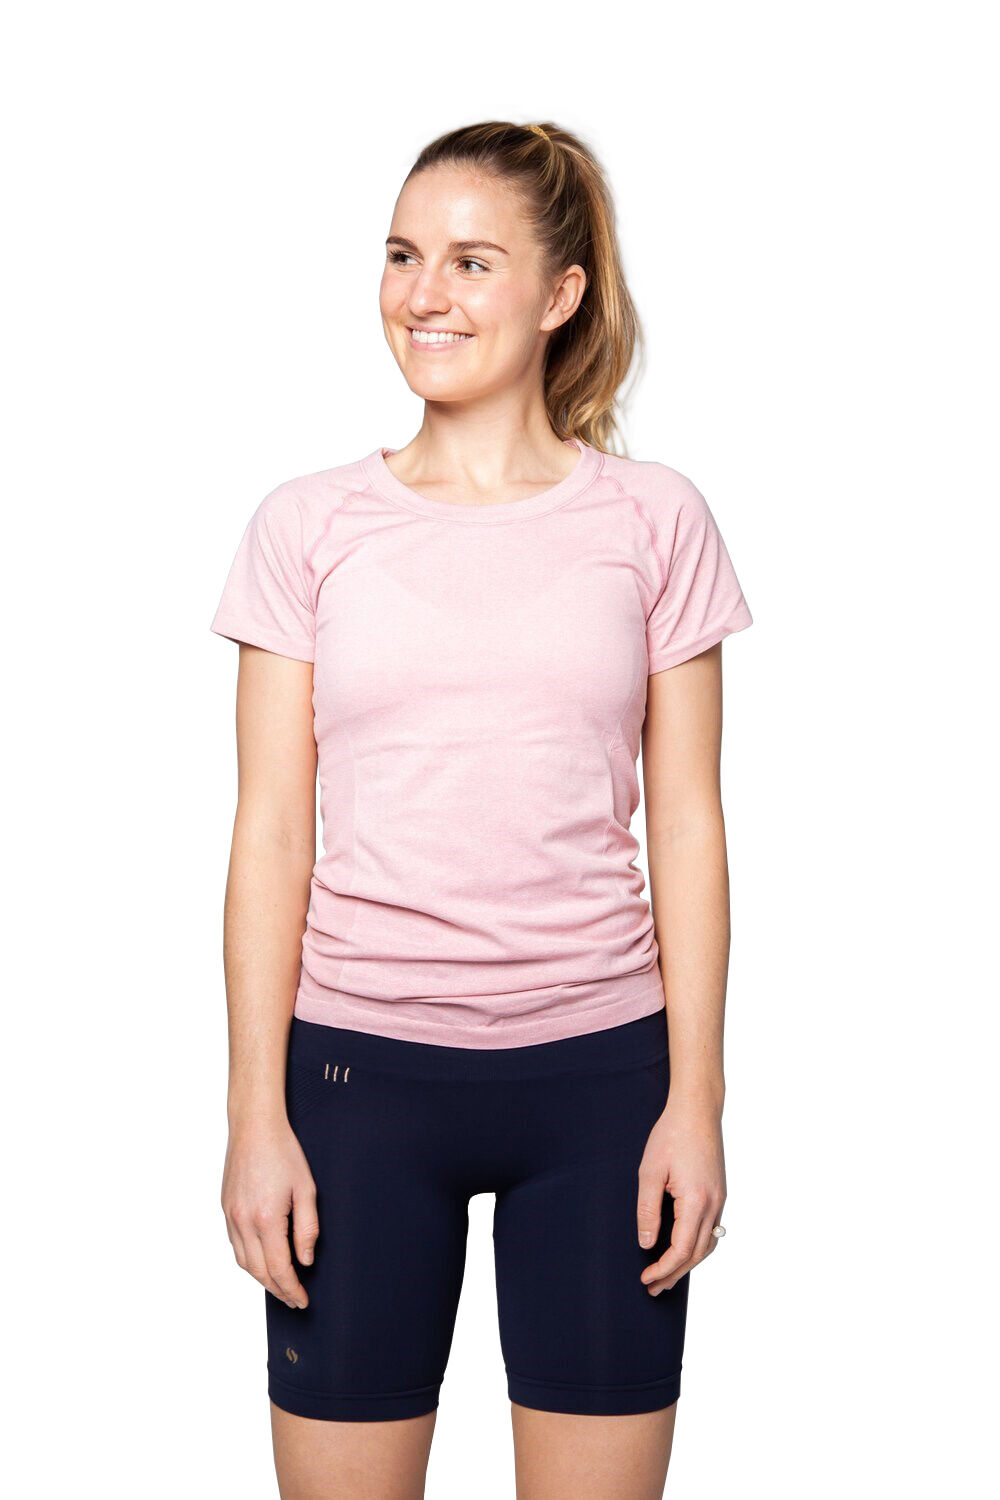 Stateofmind T-Shirt Pink M 2021